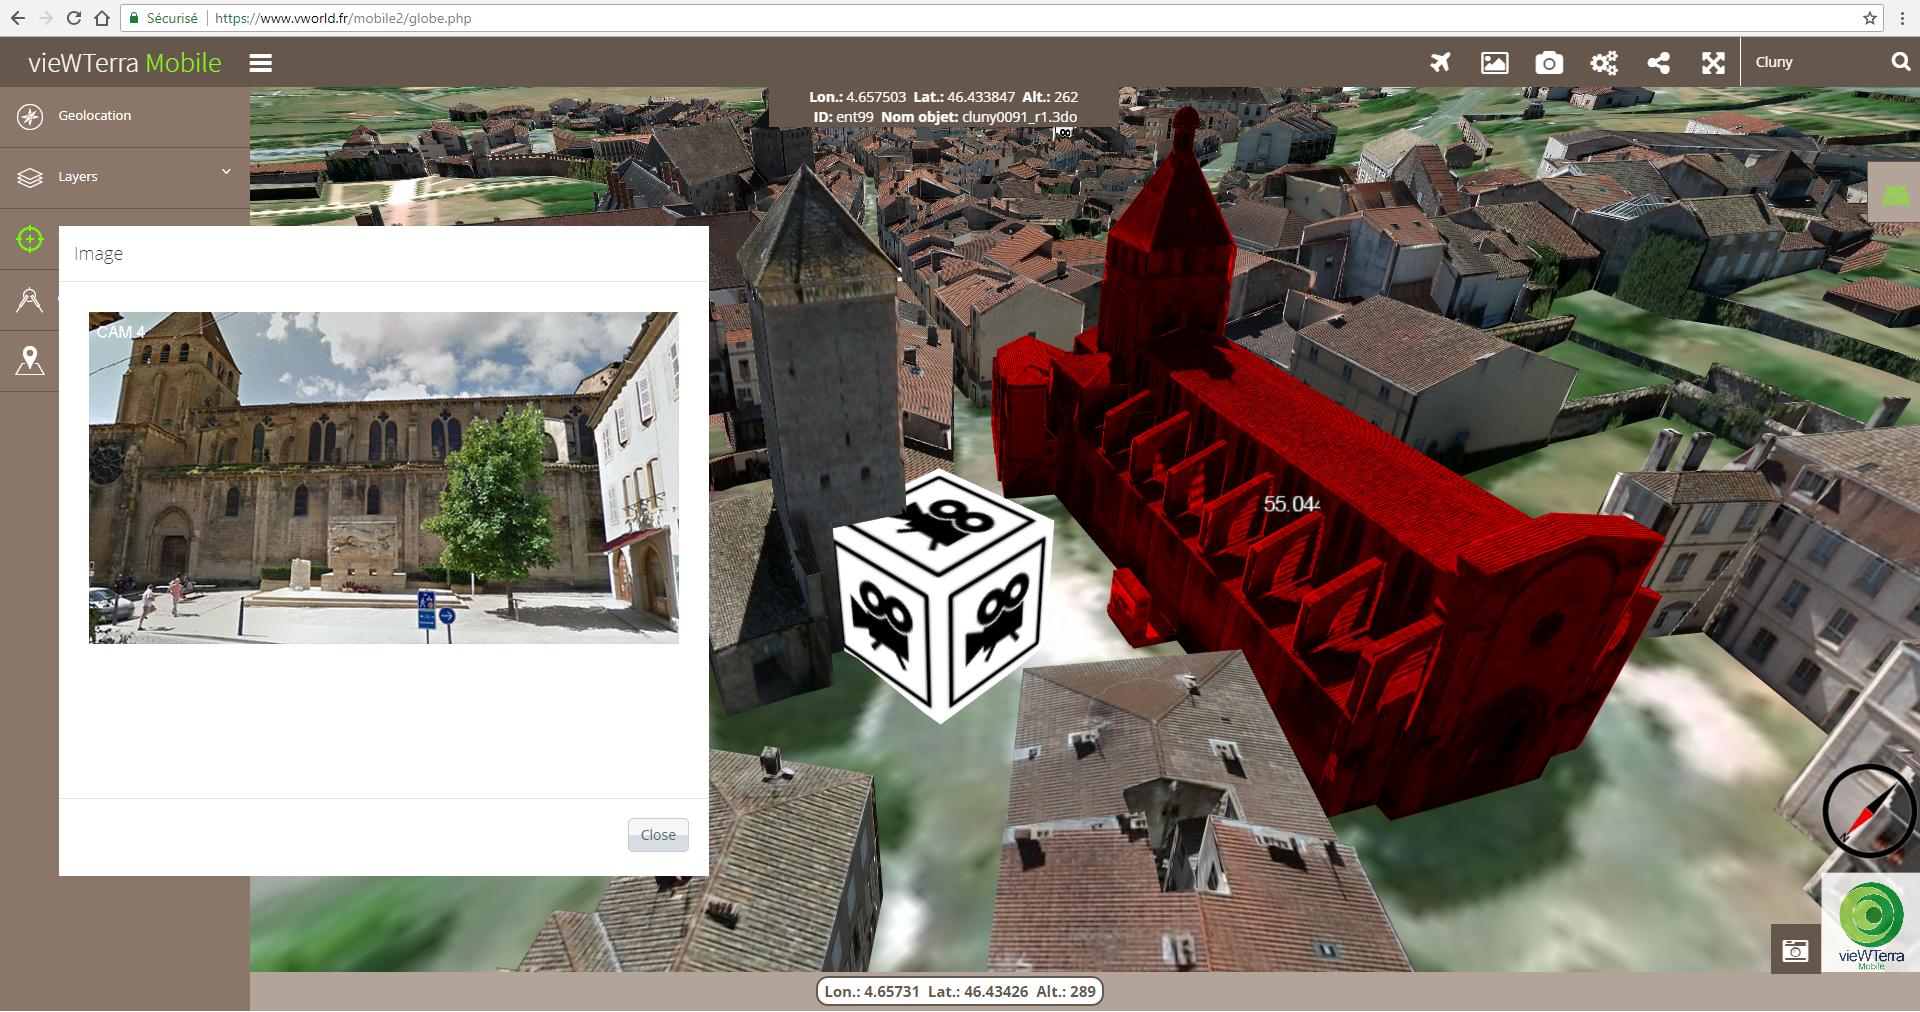 Applicazione vieWTerra Mobile 3D Earth Viewer